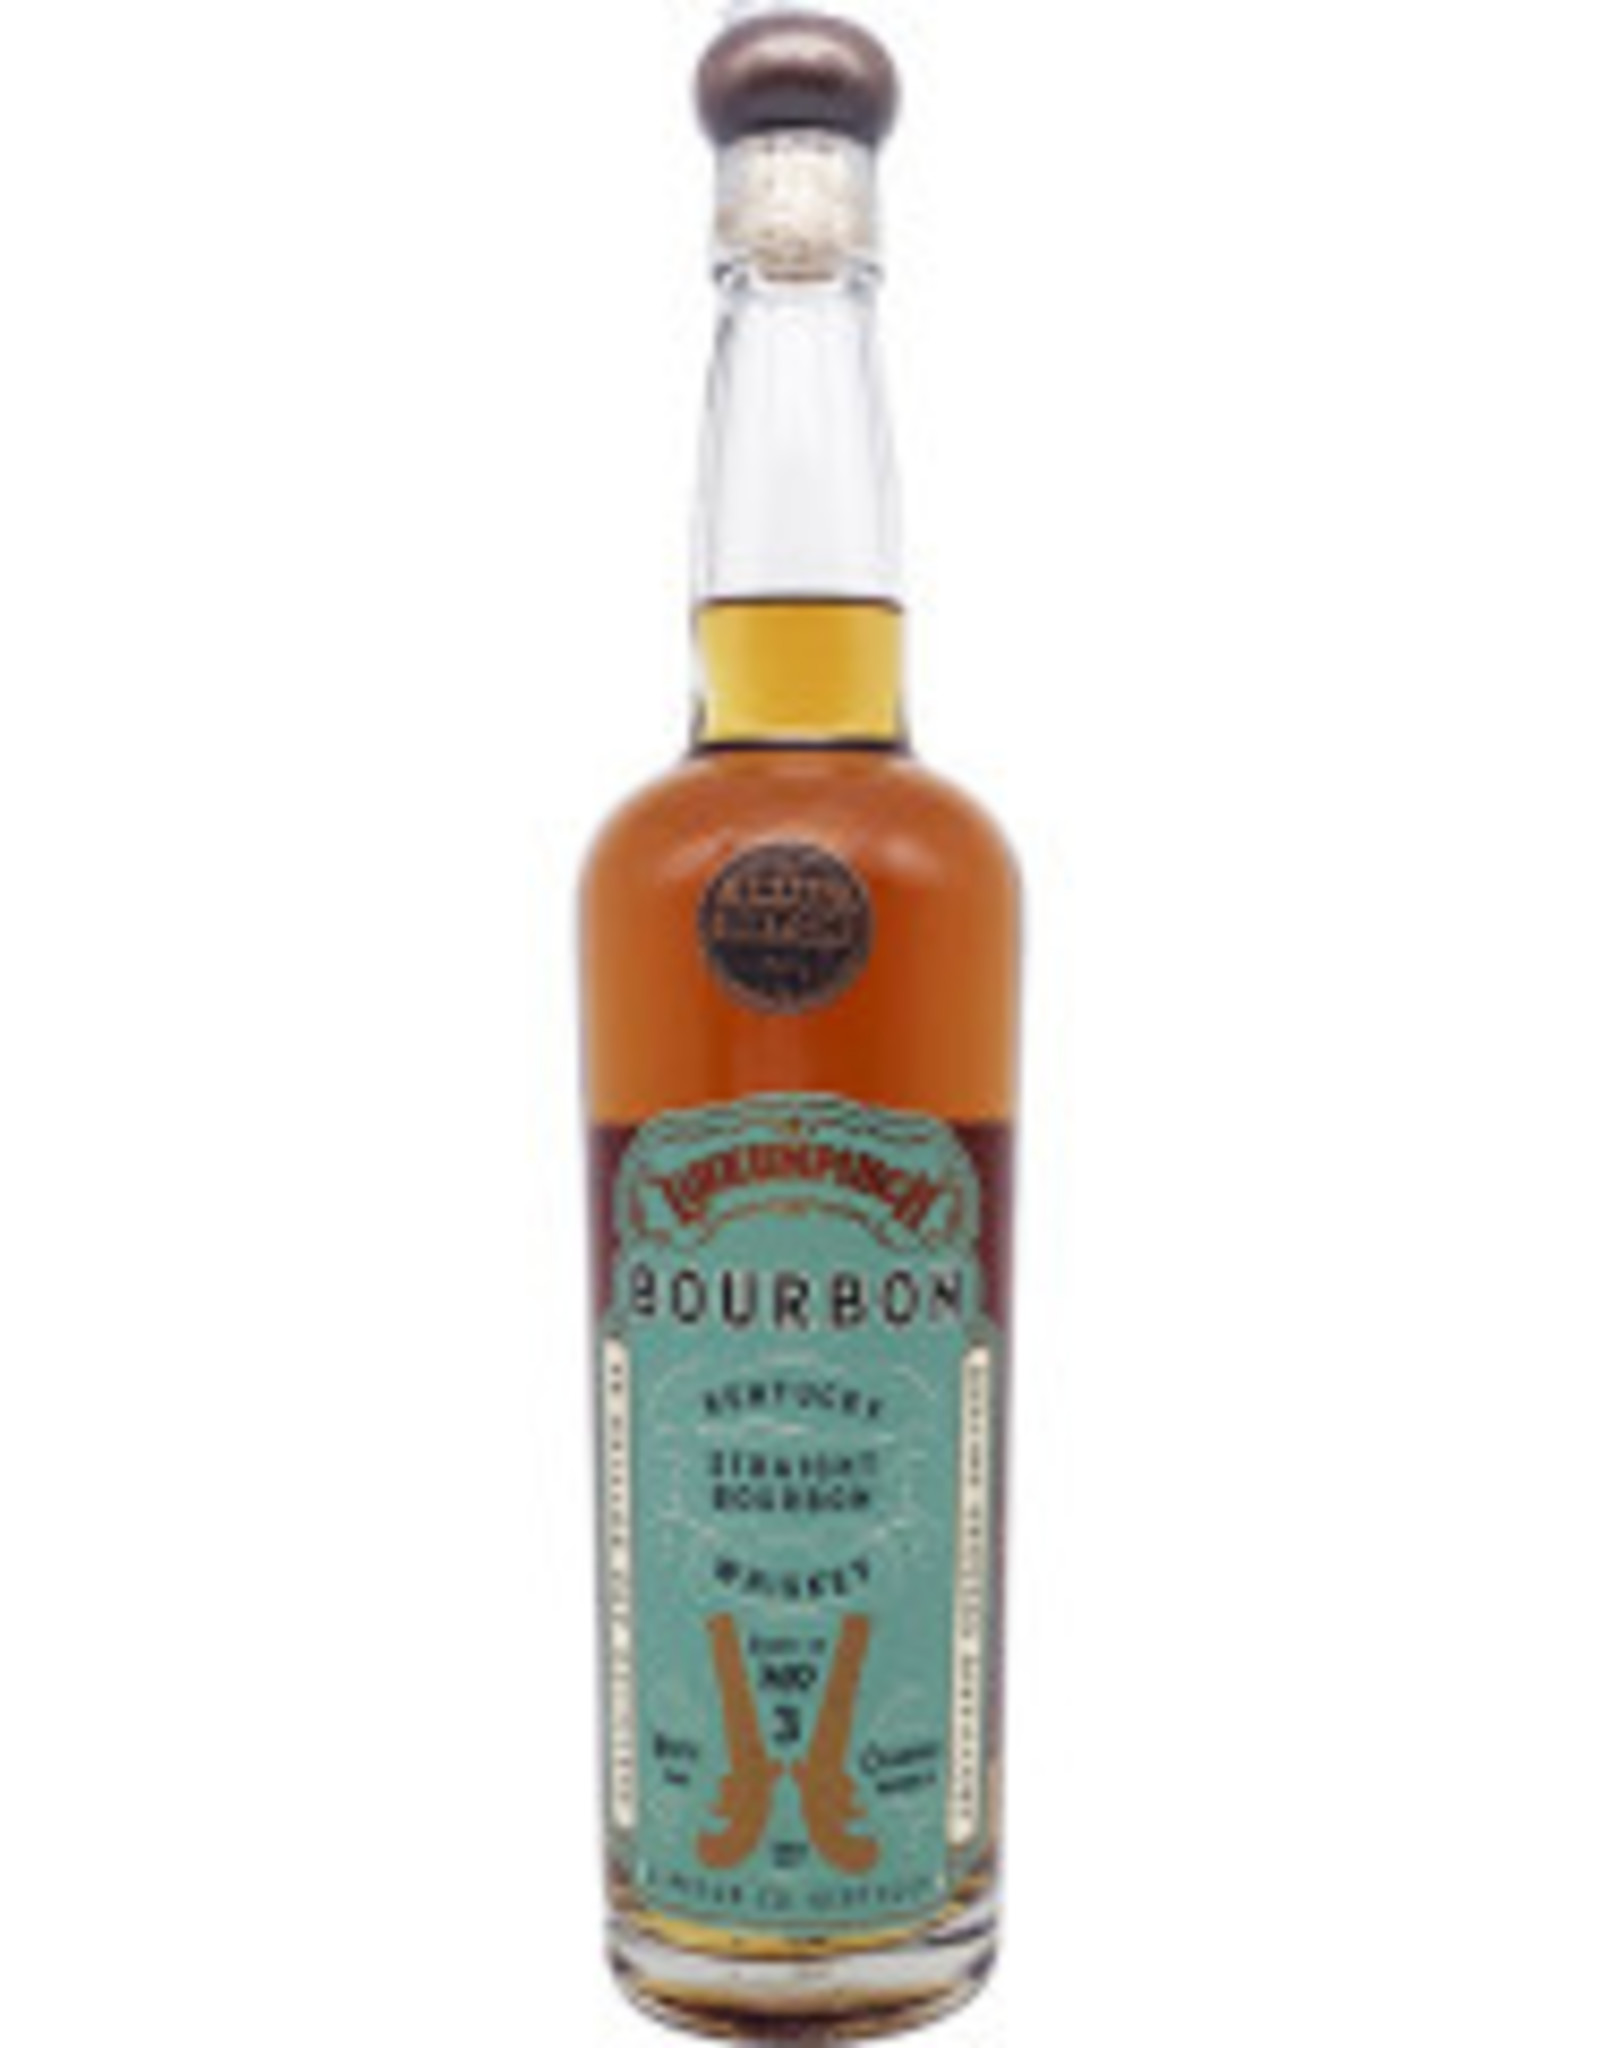 Linkumpinch Bourbon Linkumpinch bourbon l Aged 4 Years 750 mL